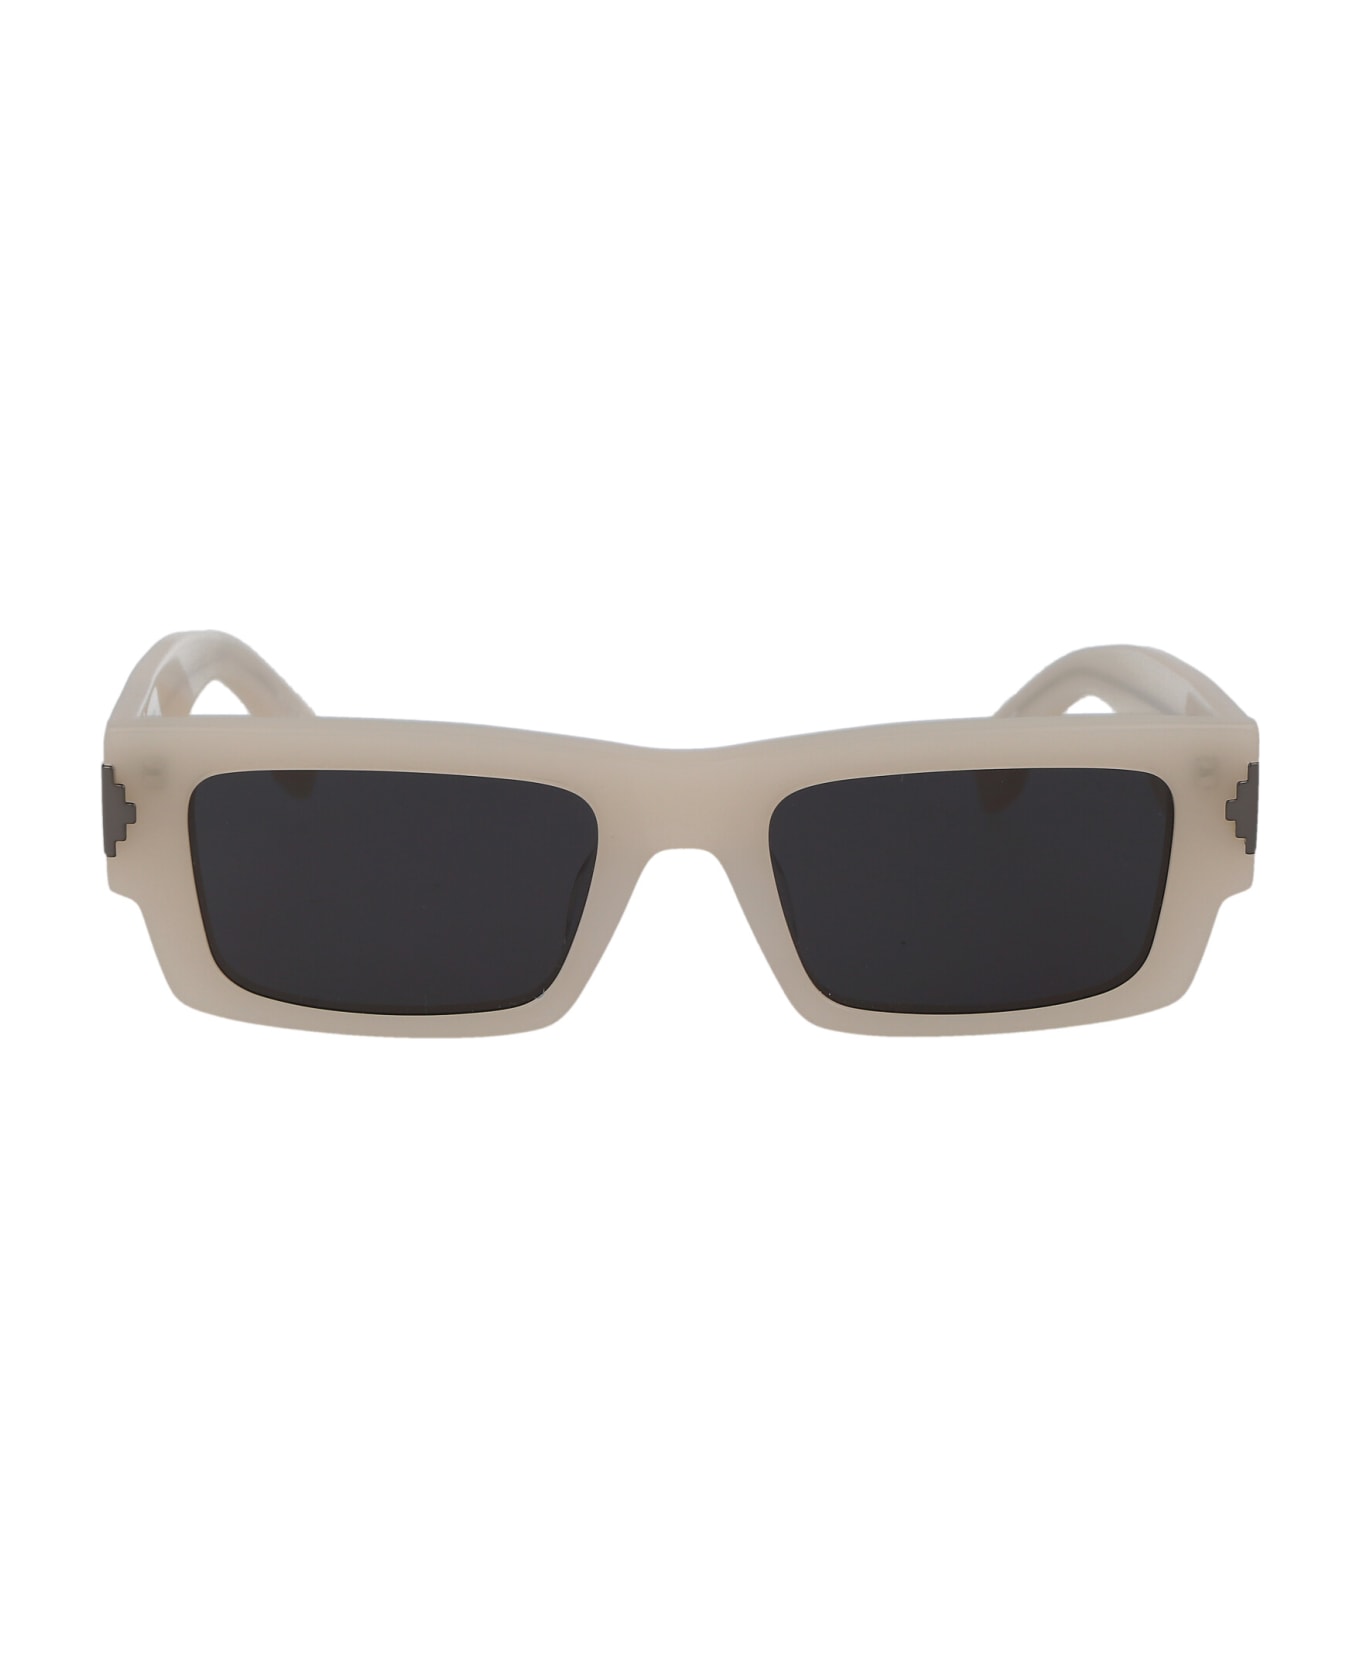 Marcelo Burlon Alerce Sunglasses - 6107 SAND   サングラス